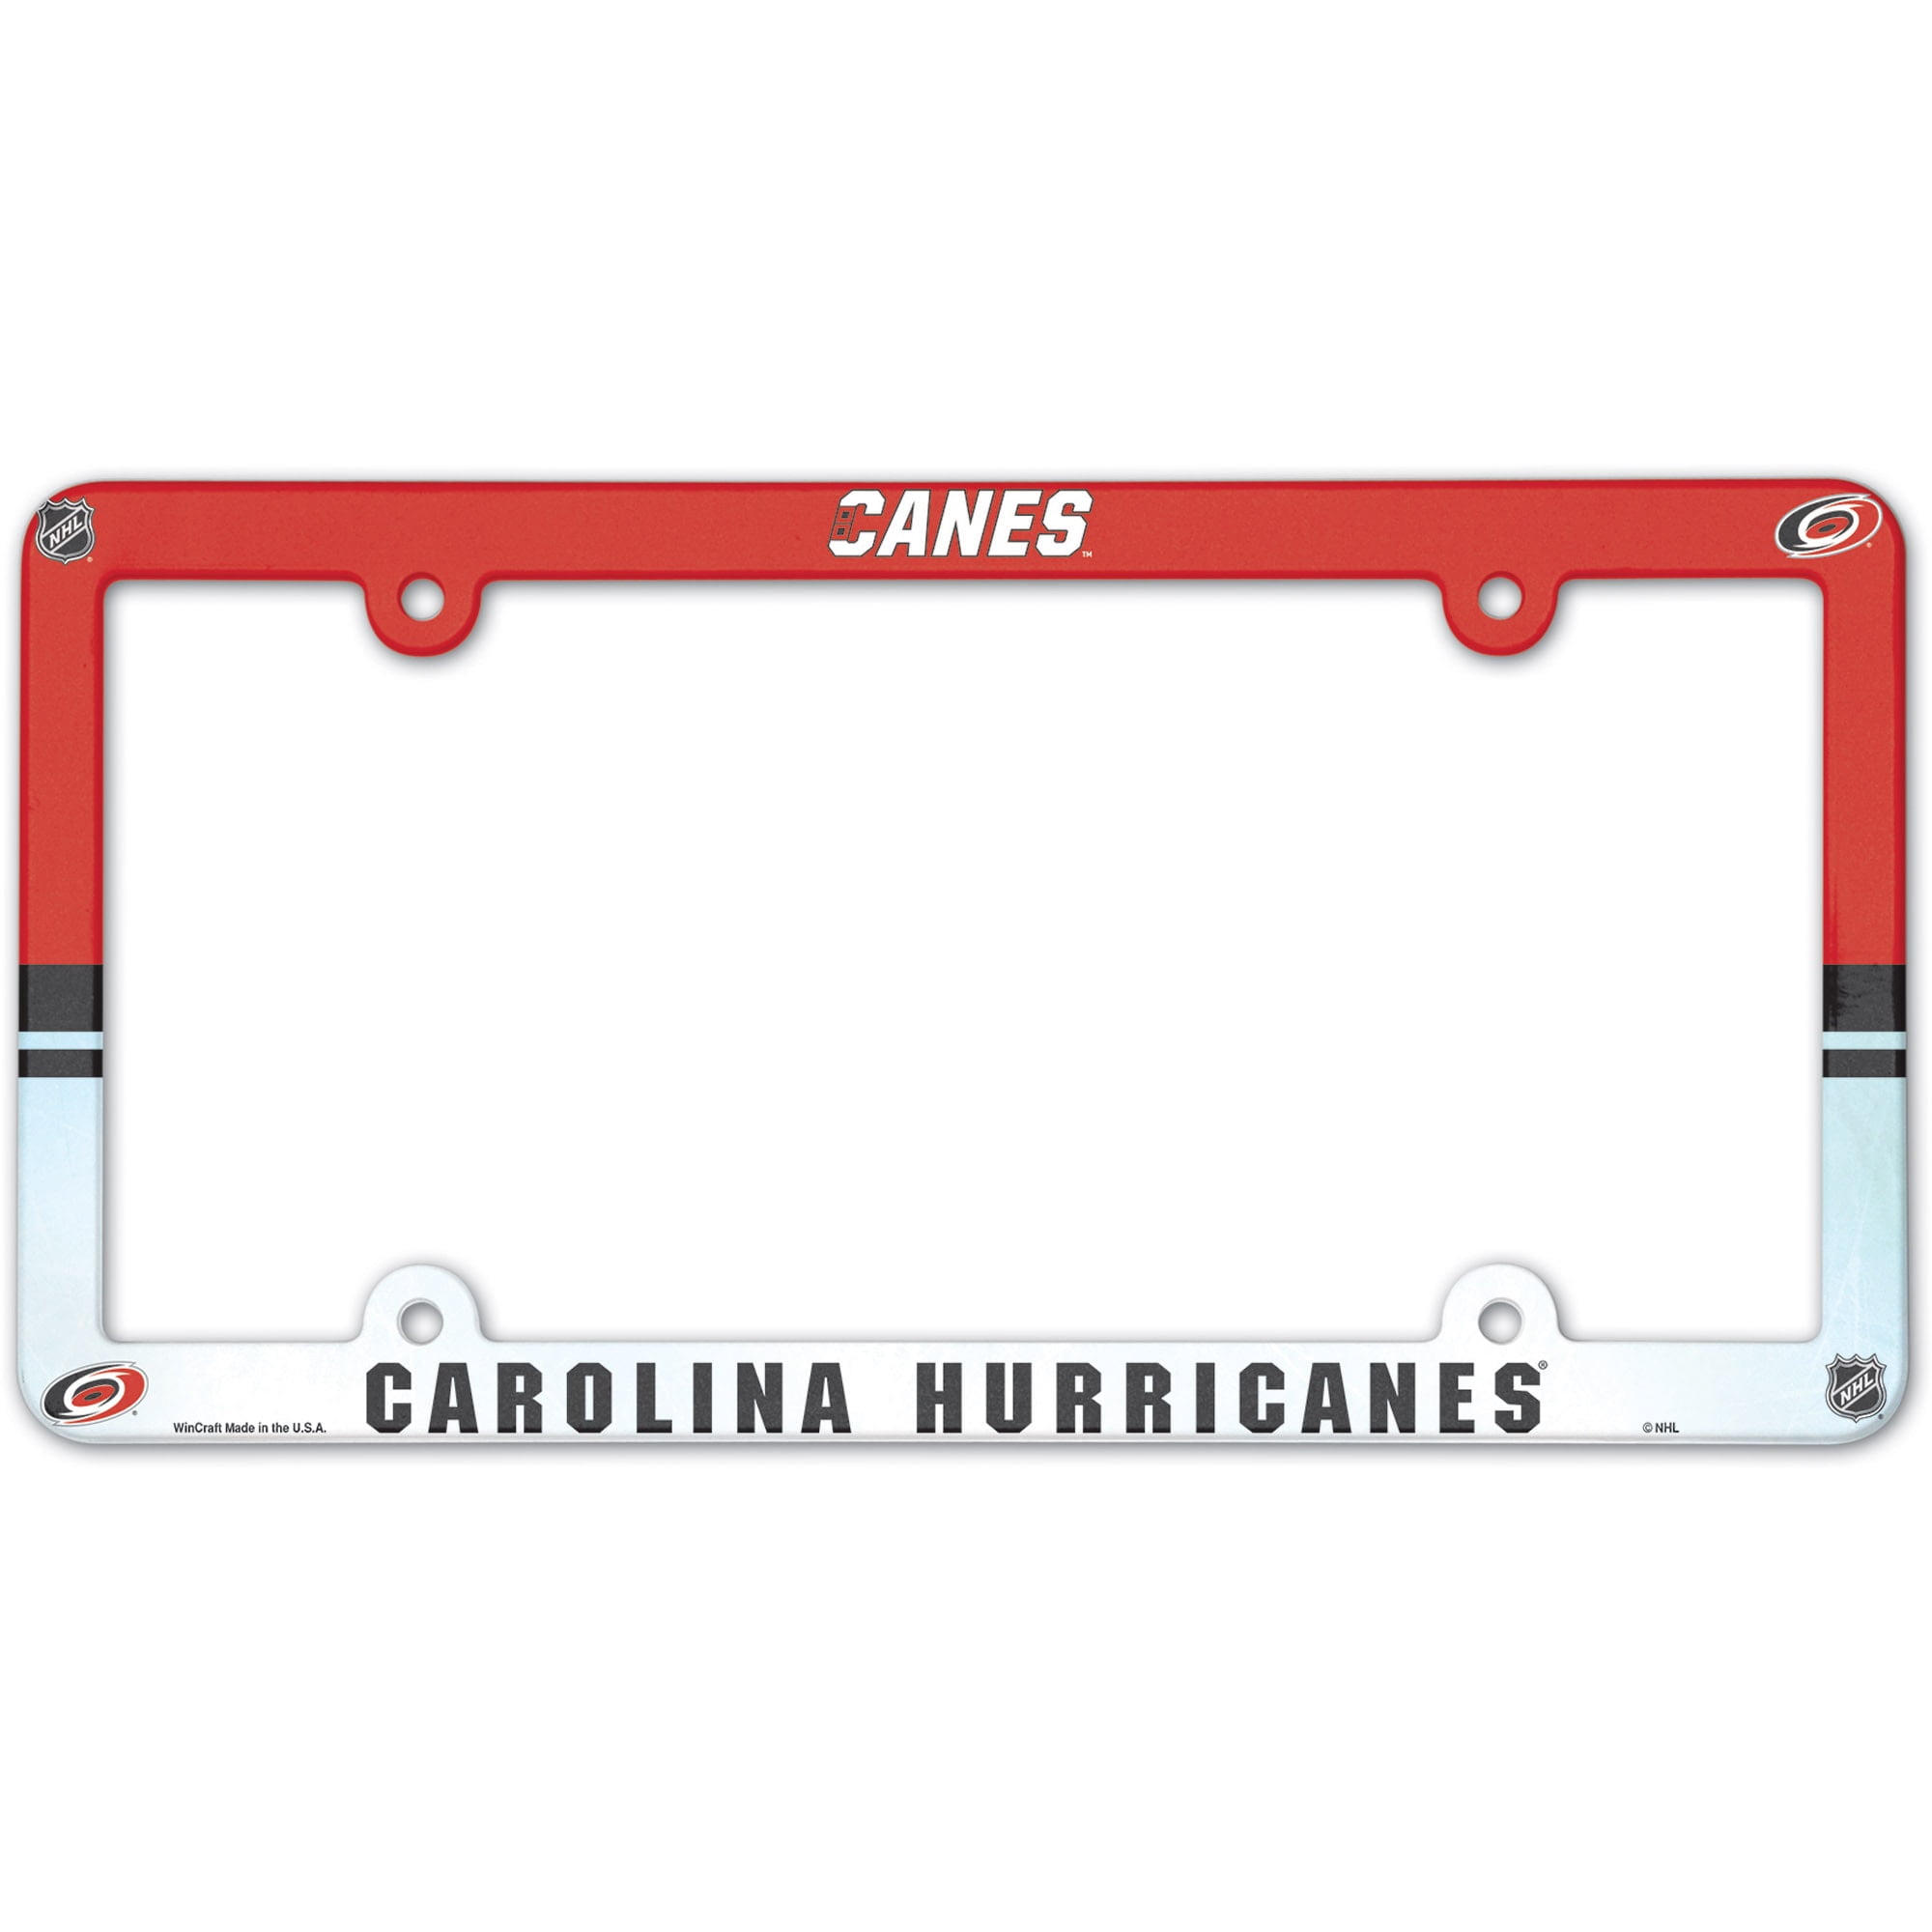 Hockey Team Metal Vanity License Plate Tag Cover Carolina Hurricanes